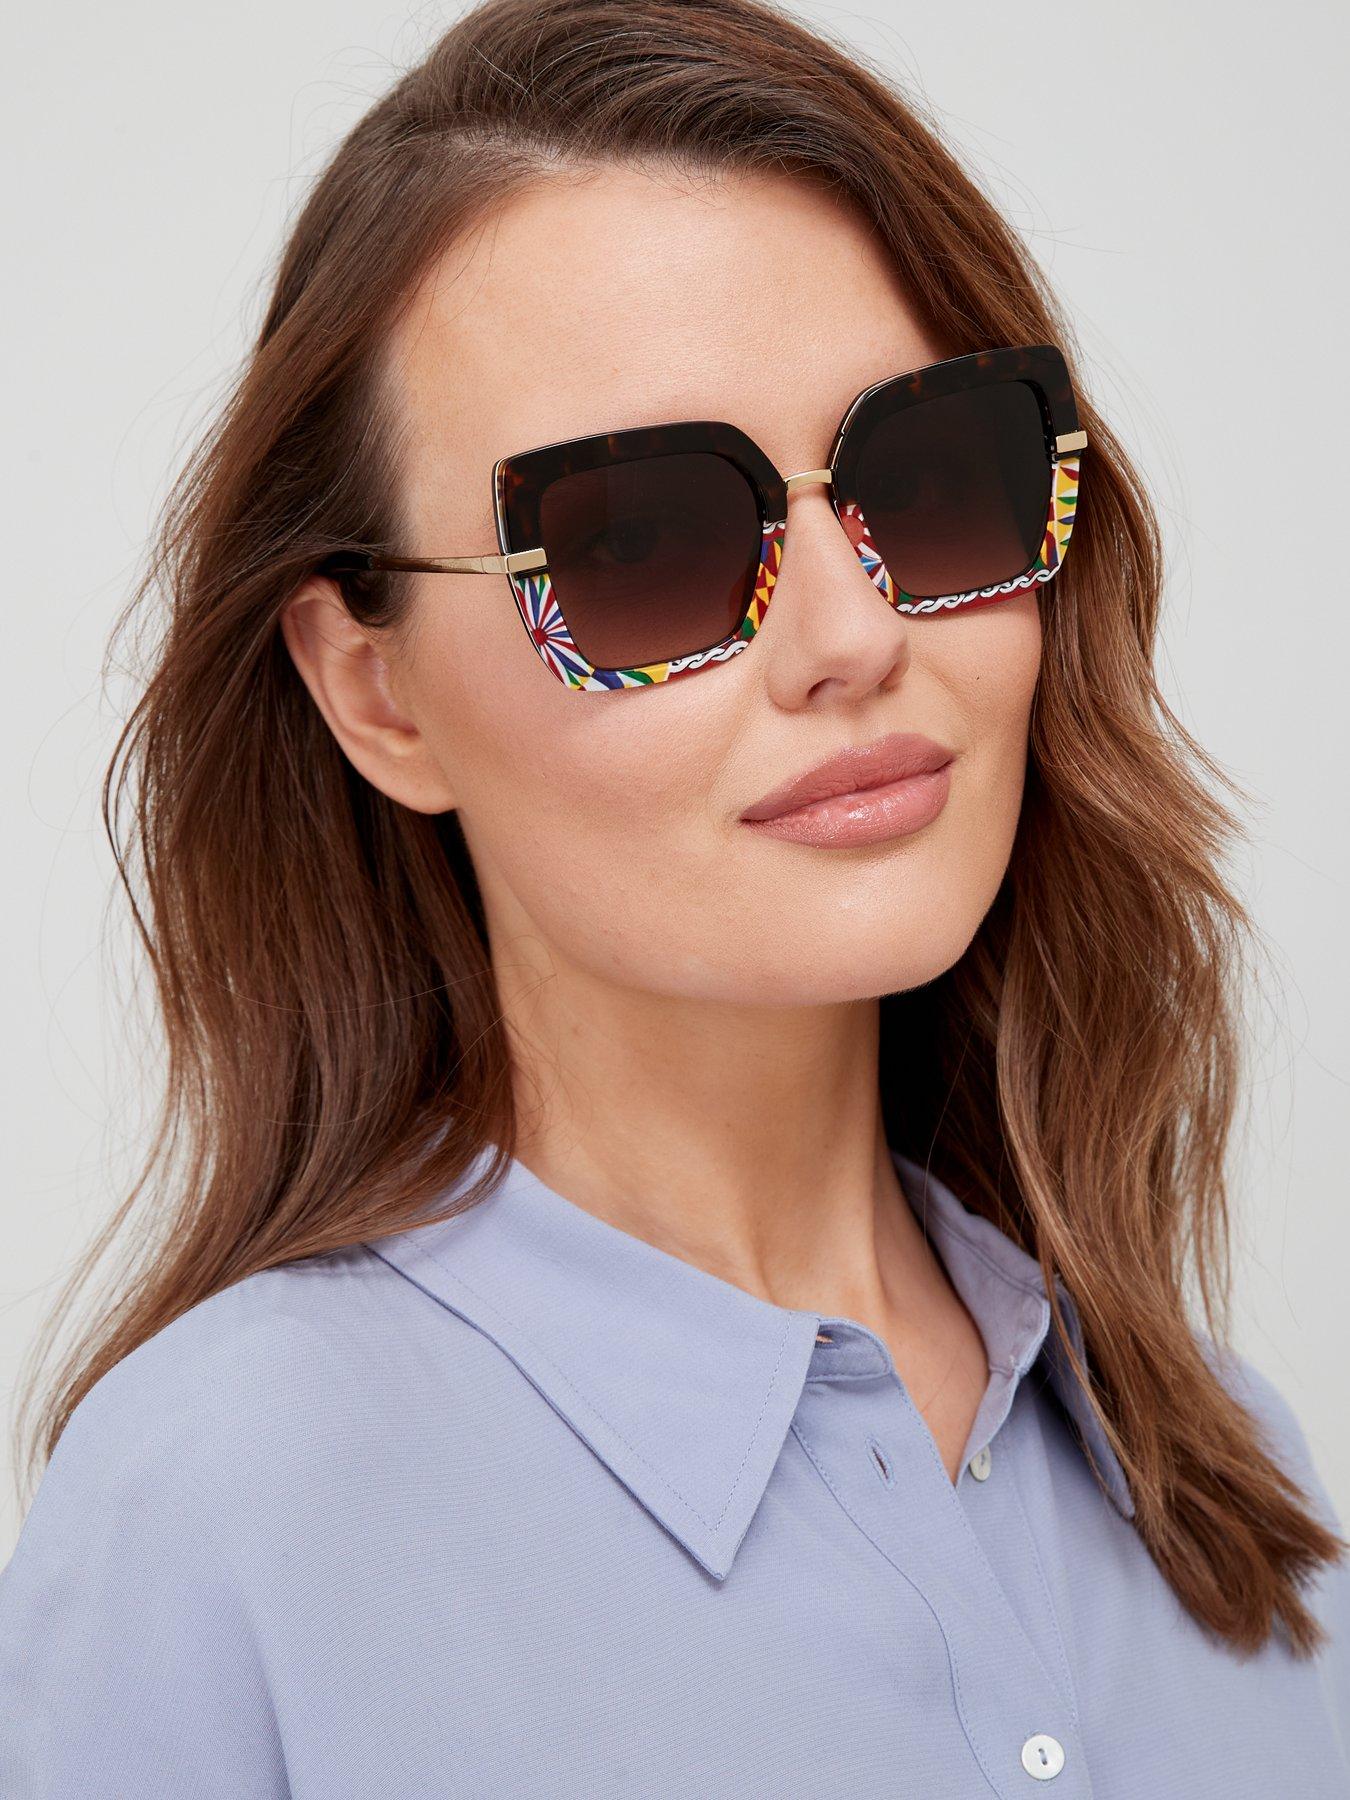 Dolce & gabbana | Sunglasses | Designer brands 